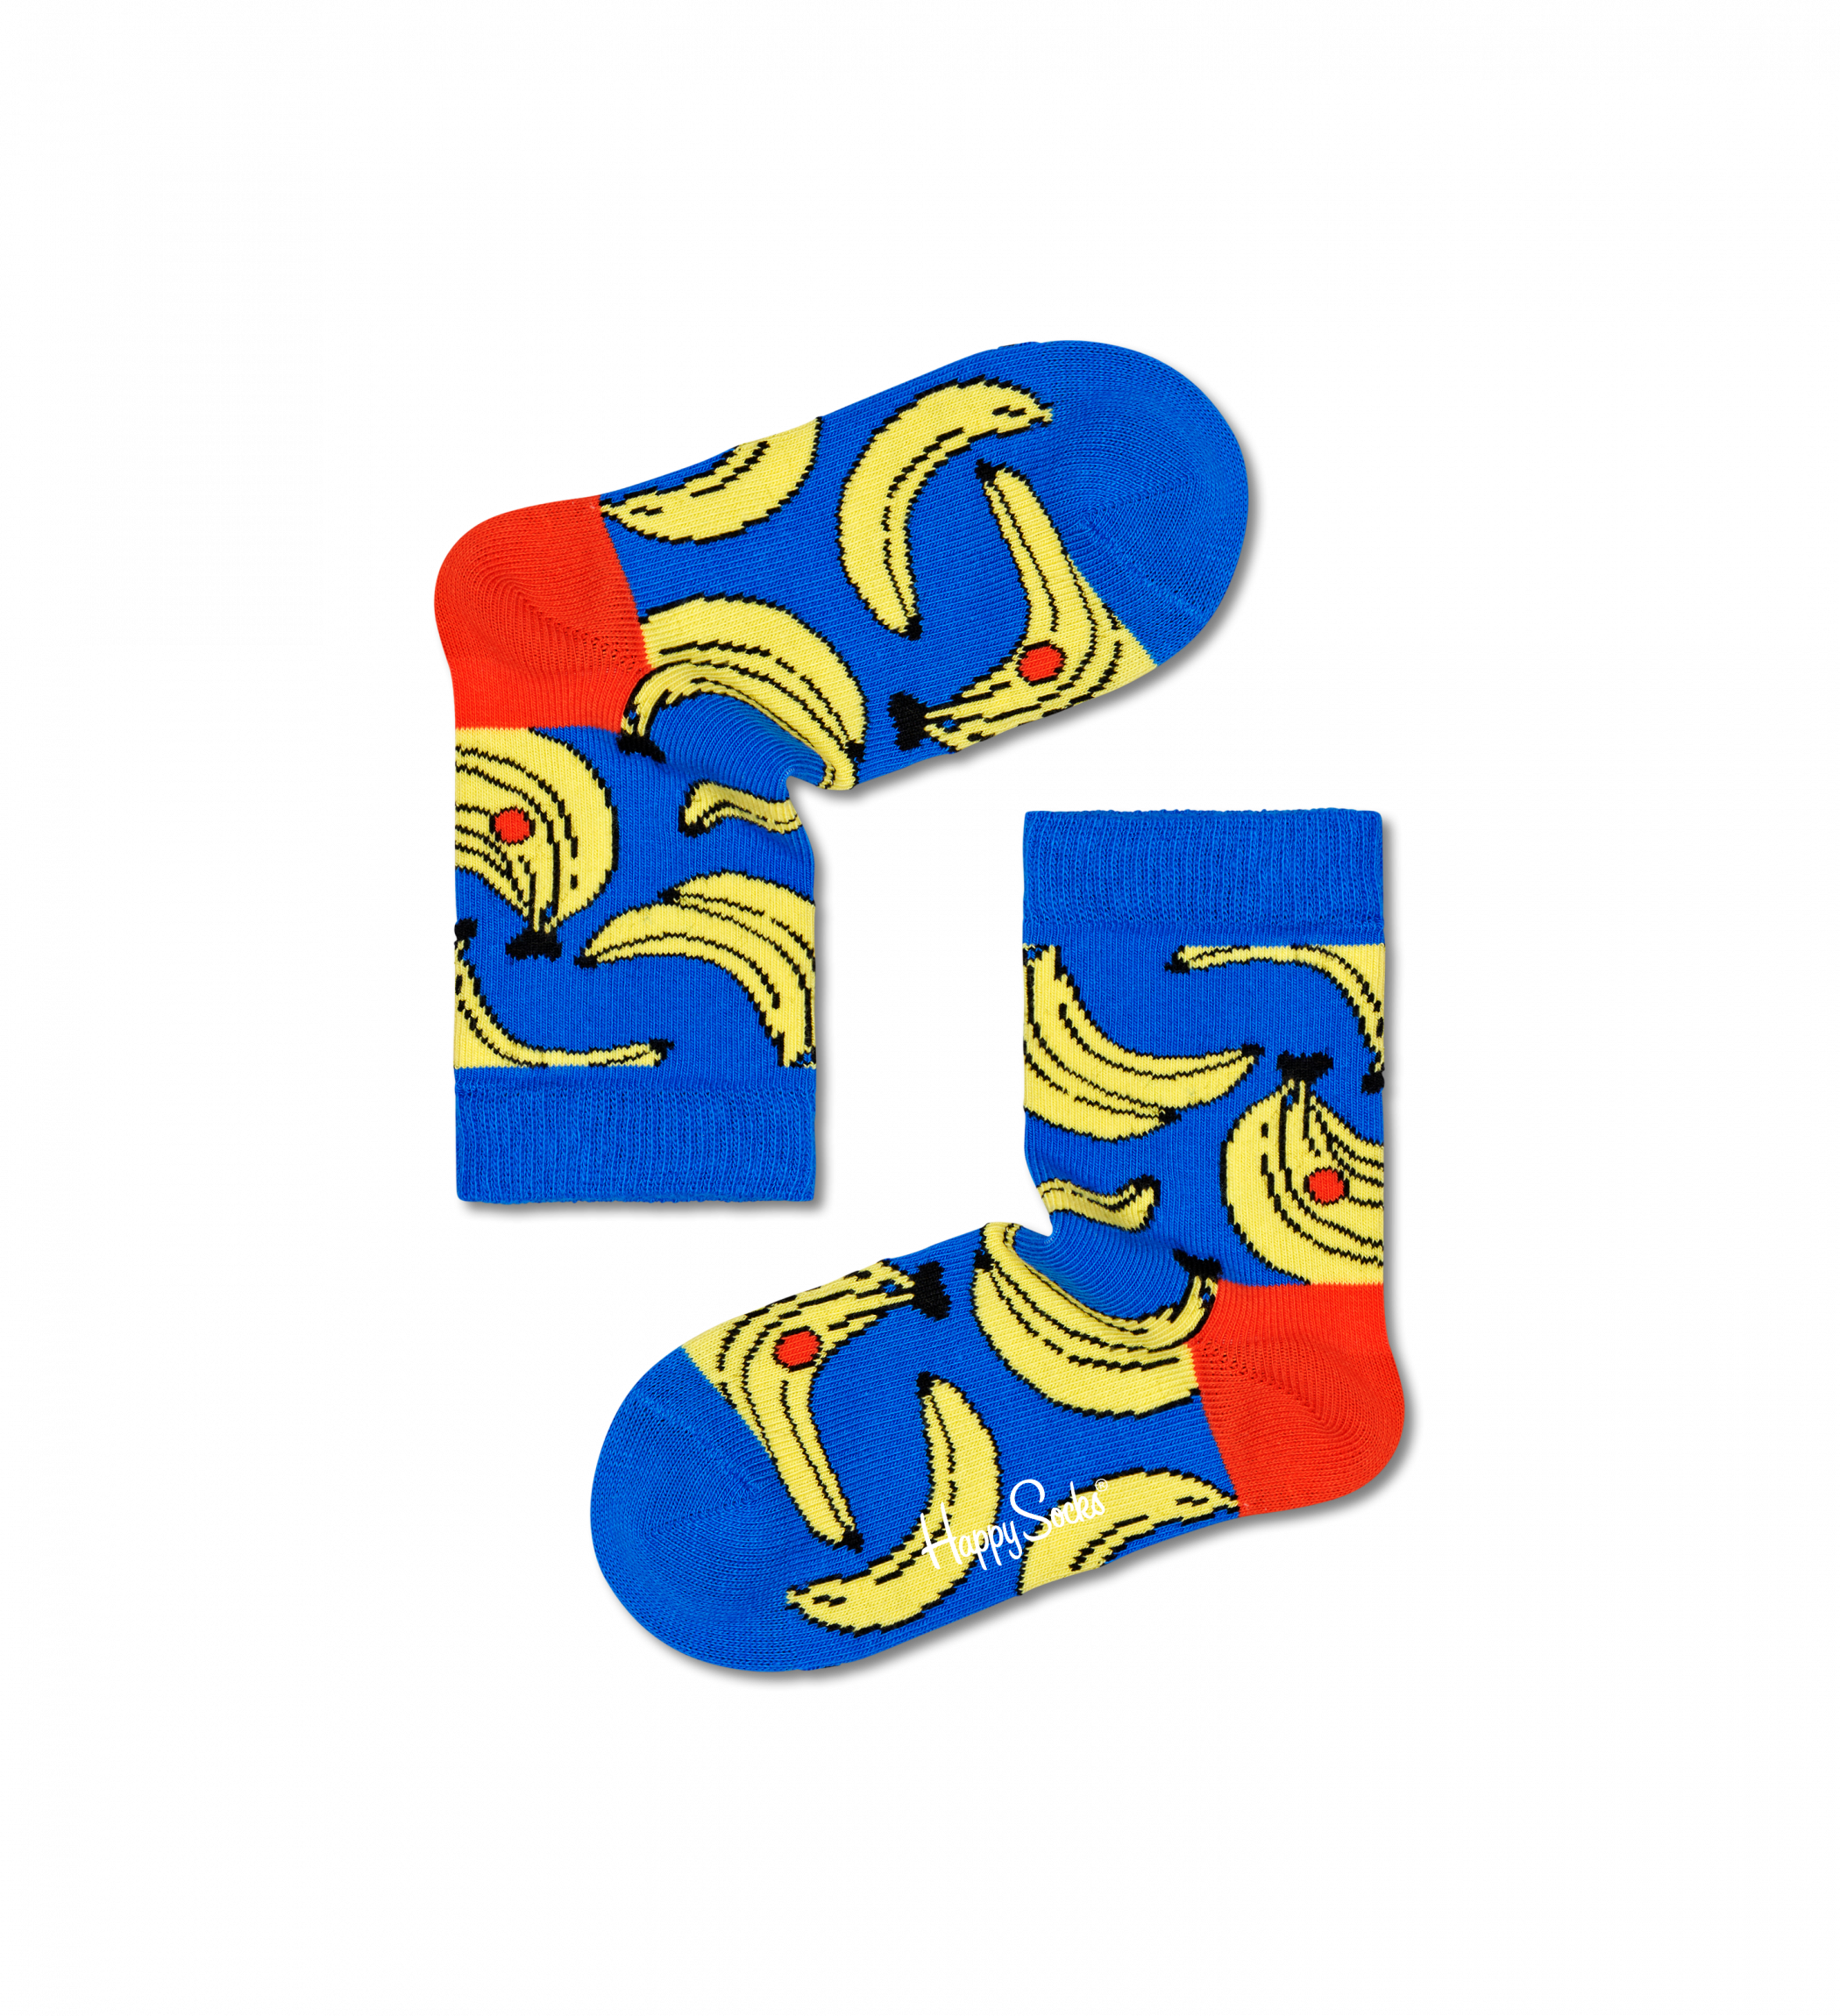 Dětské modré ponožky Happy Socks, vzor Banana